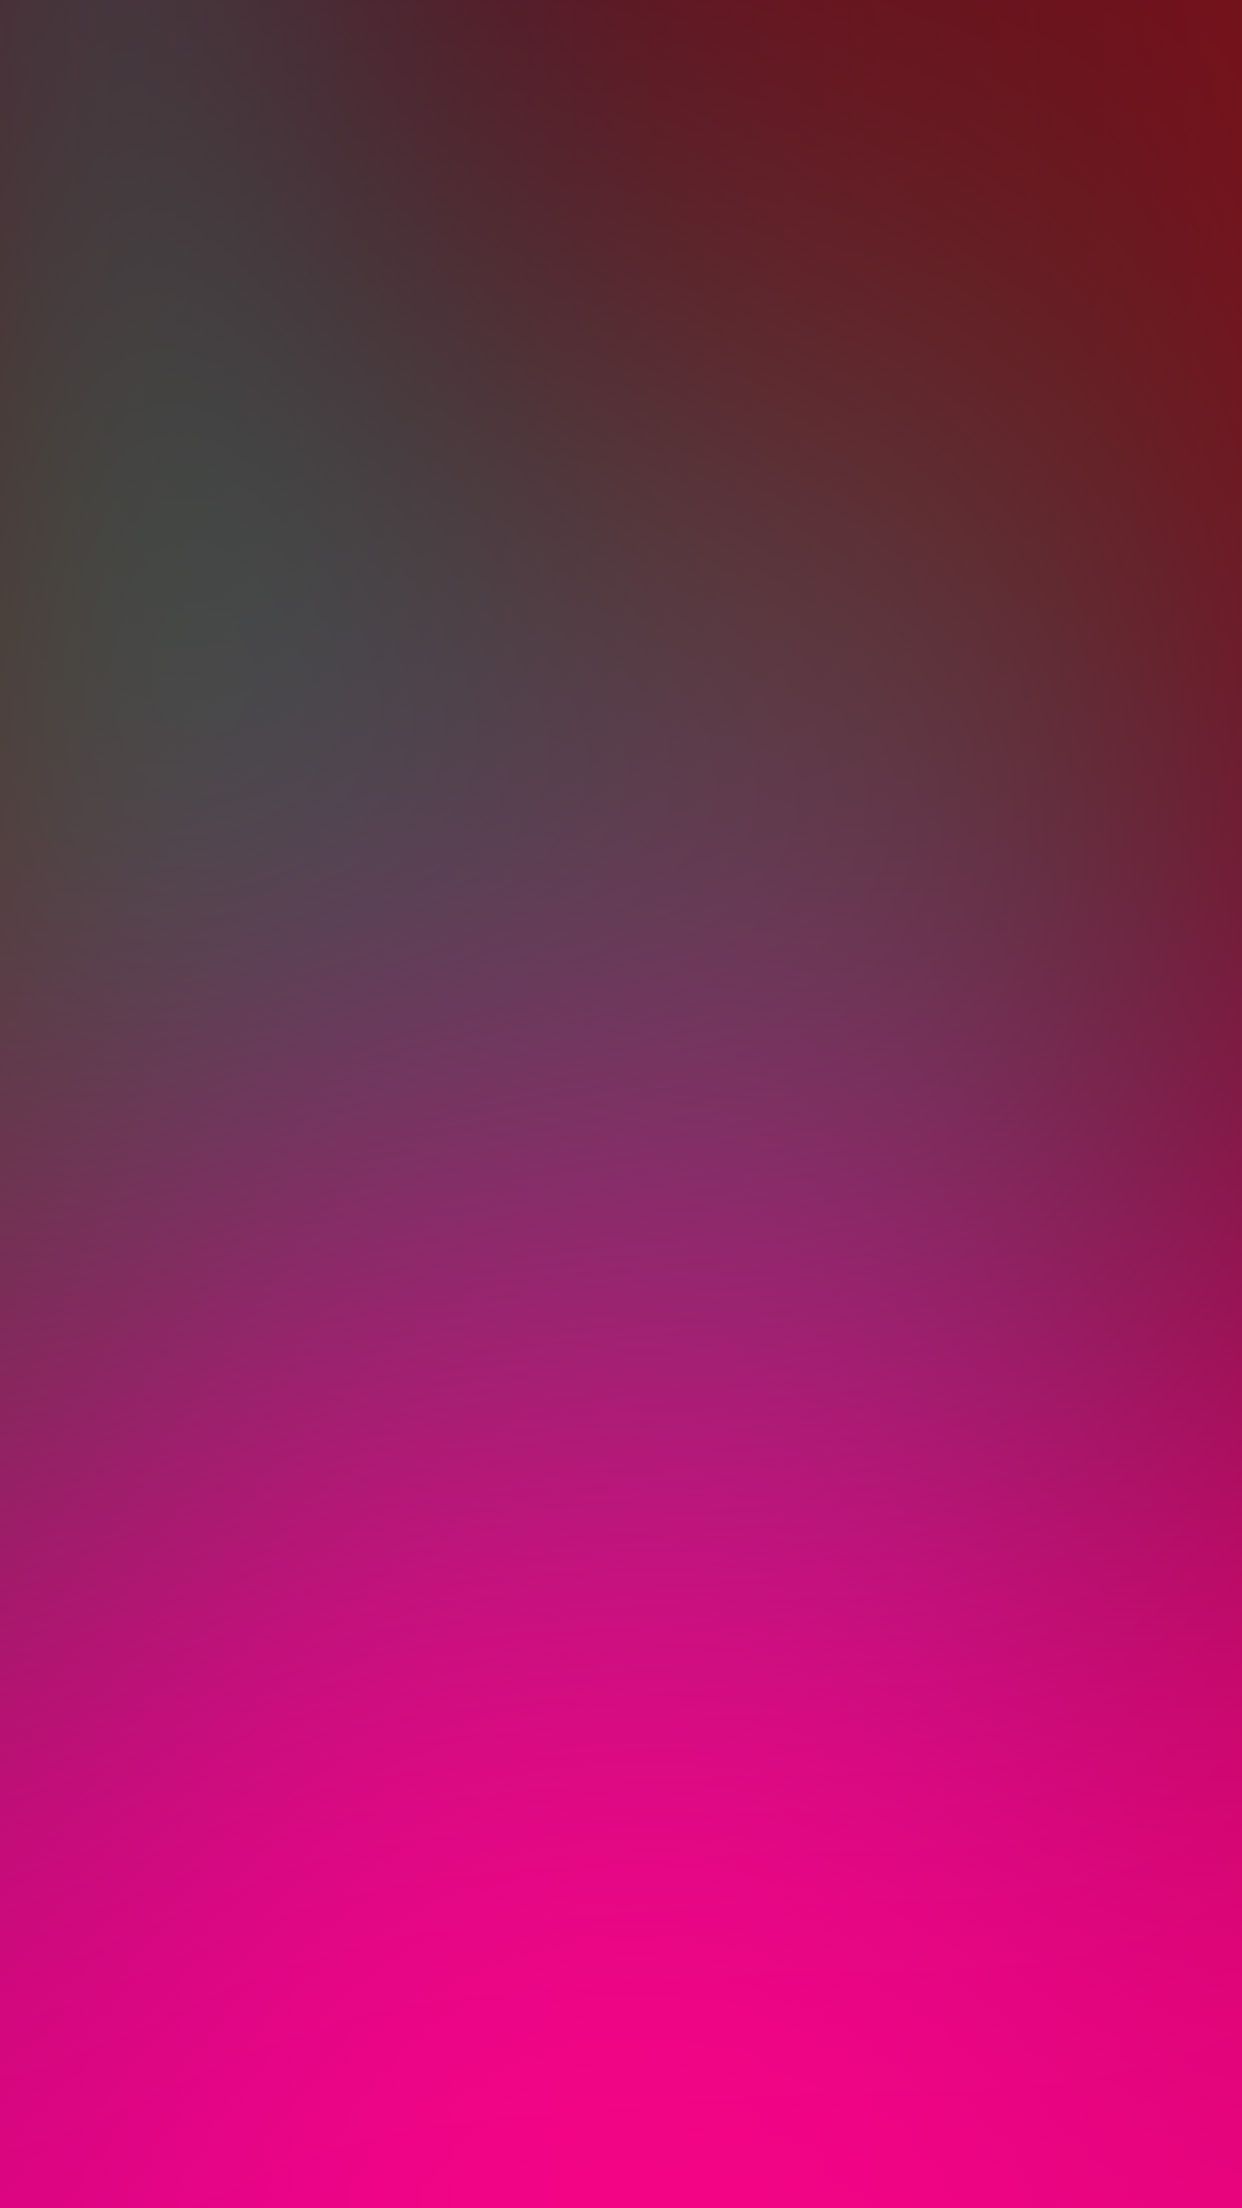 iPhone X wallpaper. red pink blur gradation